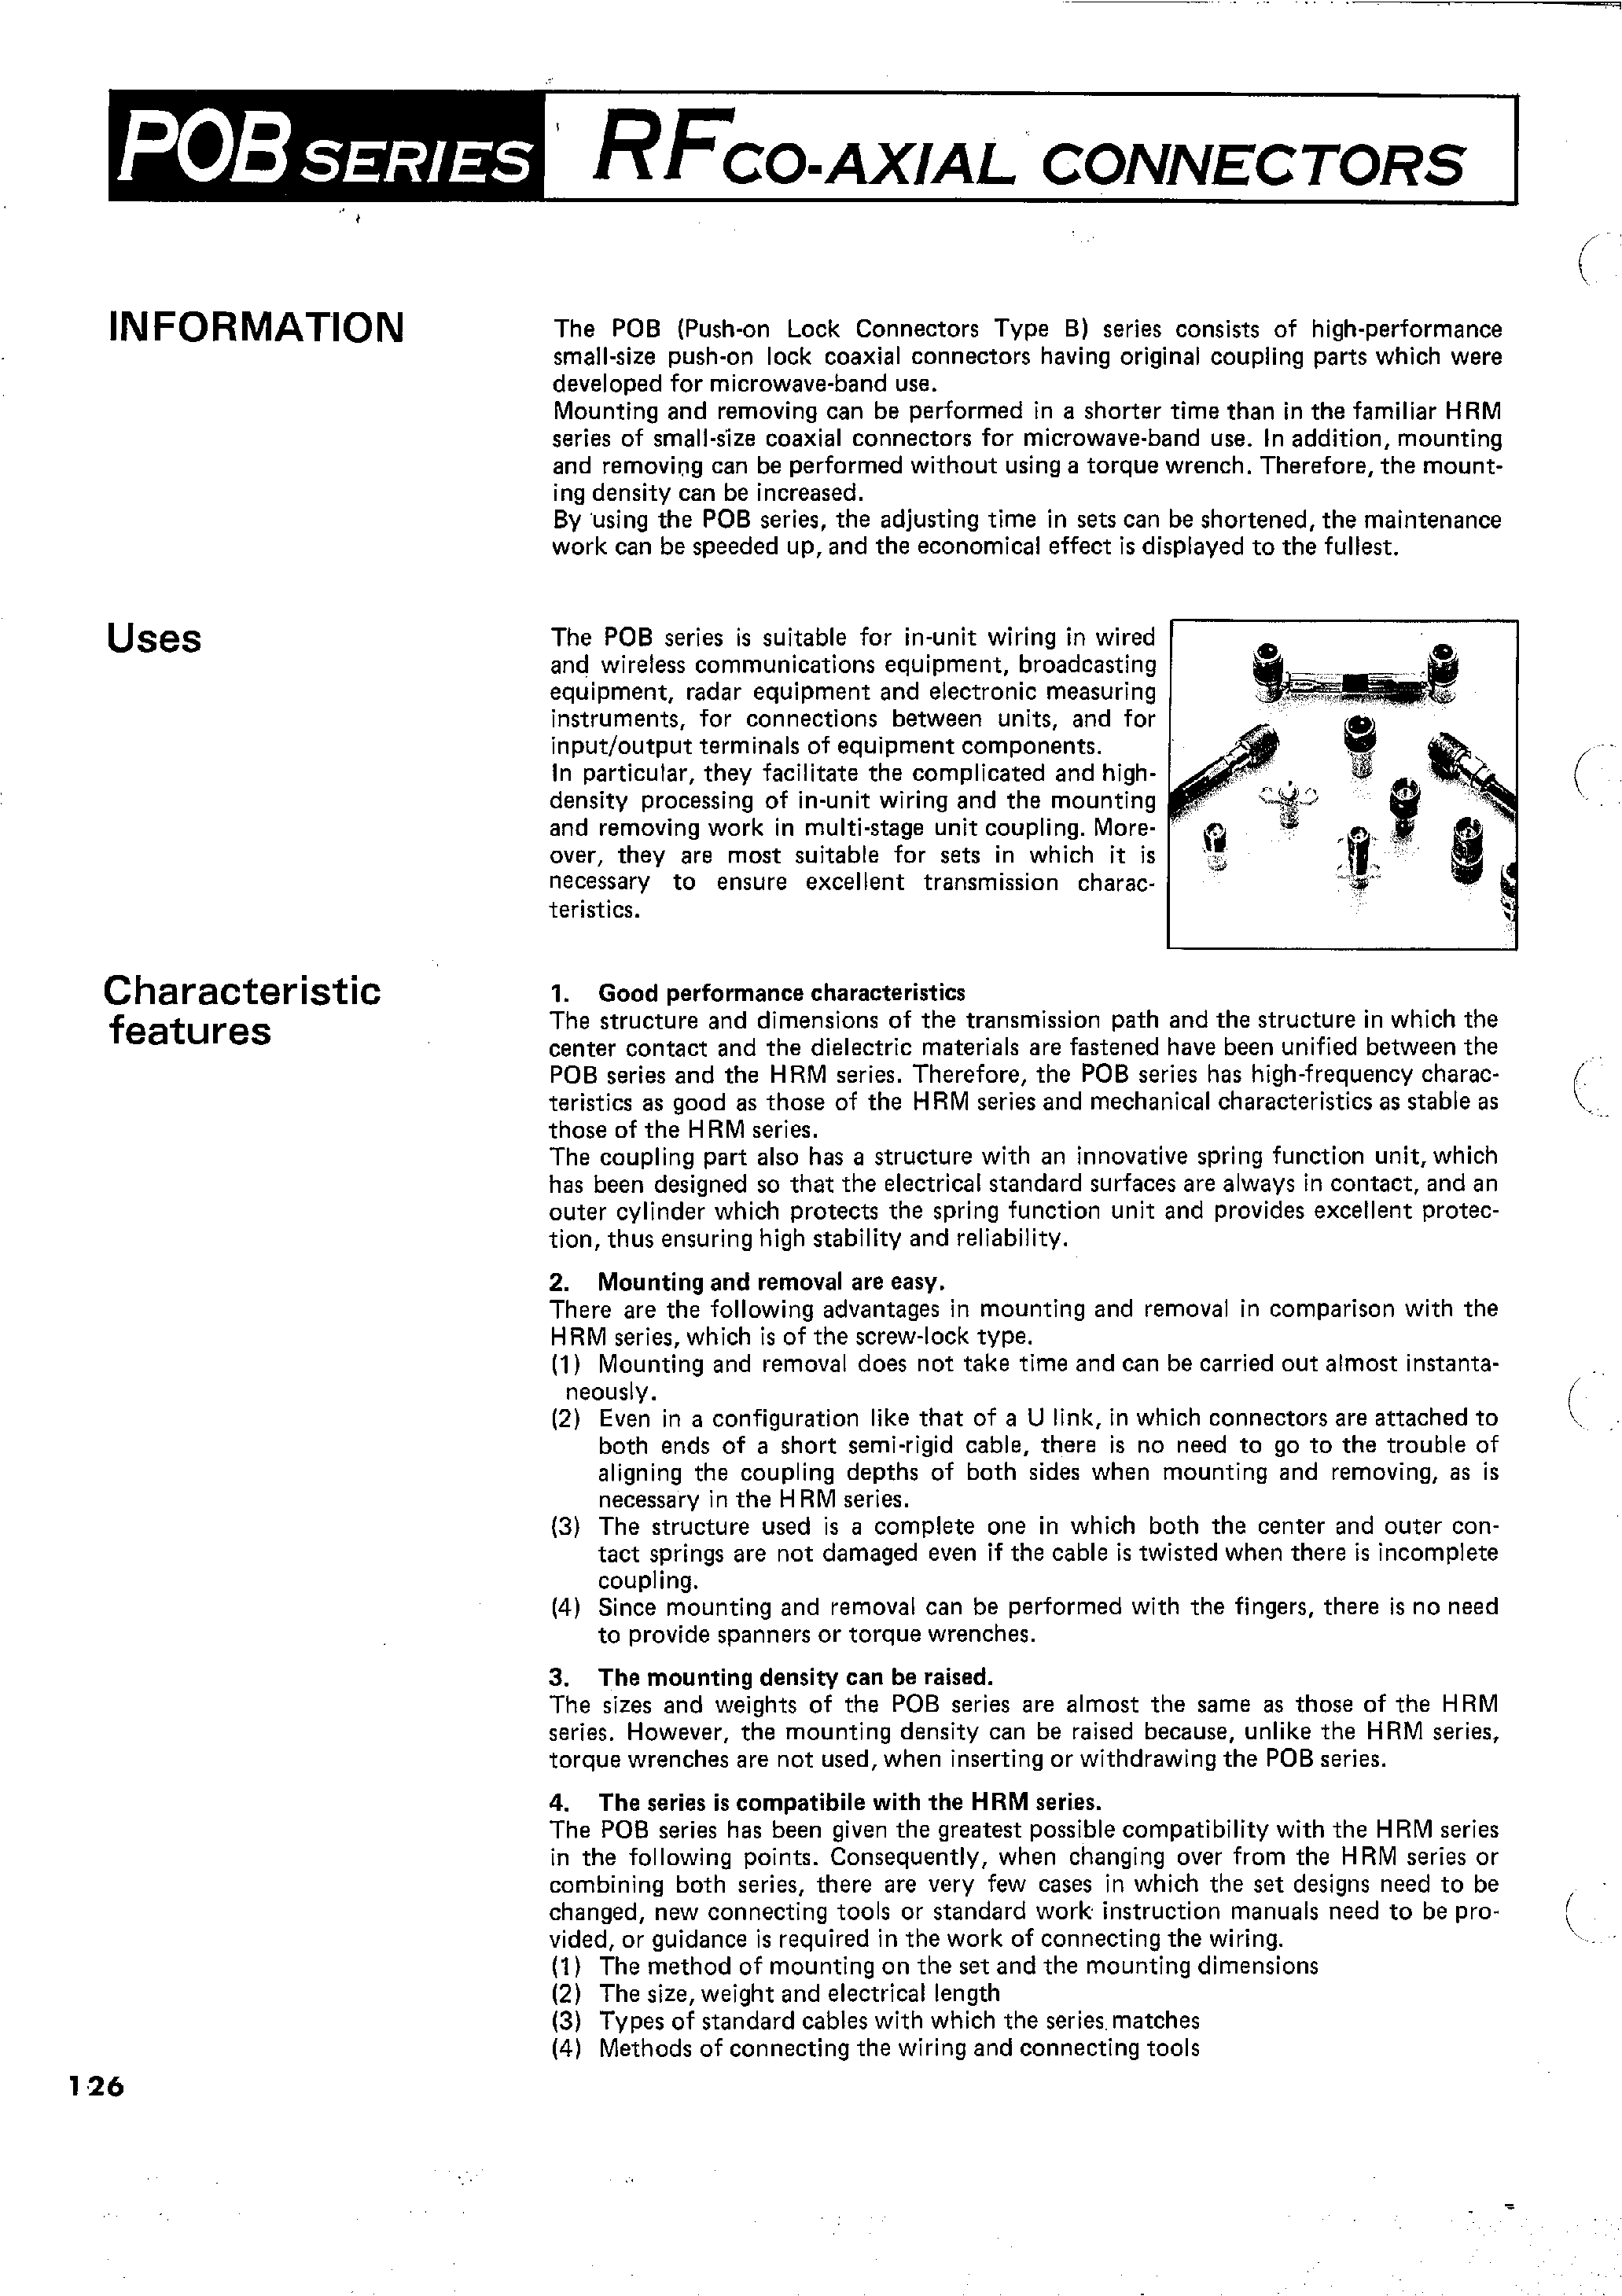 Datasheet POB-J-141 - RFCO-AXIAL CONNECTORS page 1